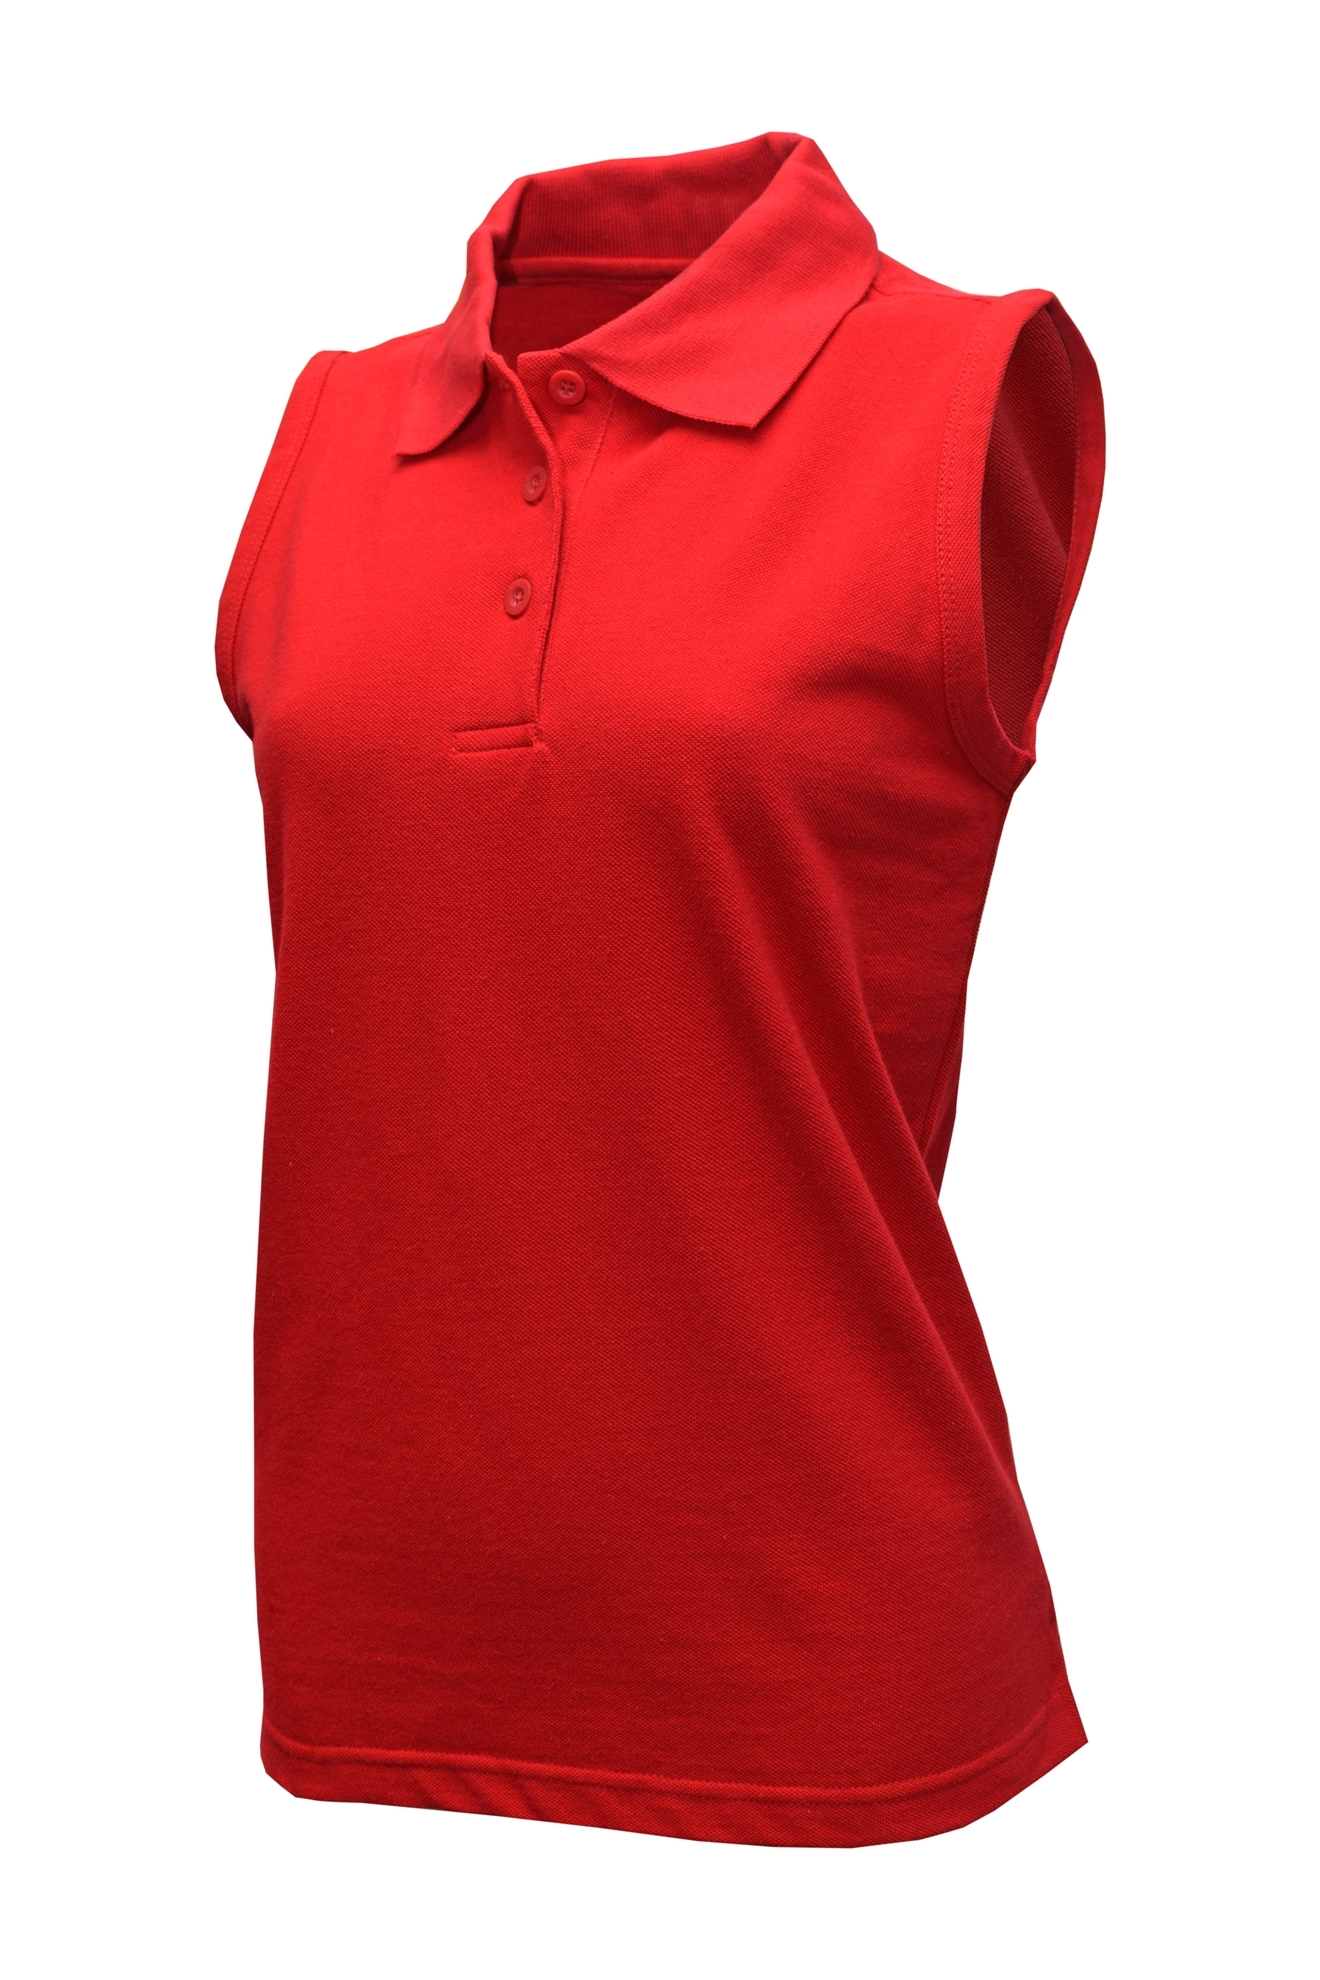 BAW Athletic Wear 981LY - Girl's Sleeveless Polo